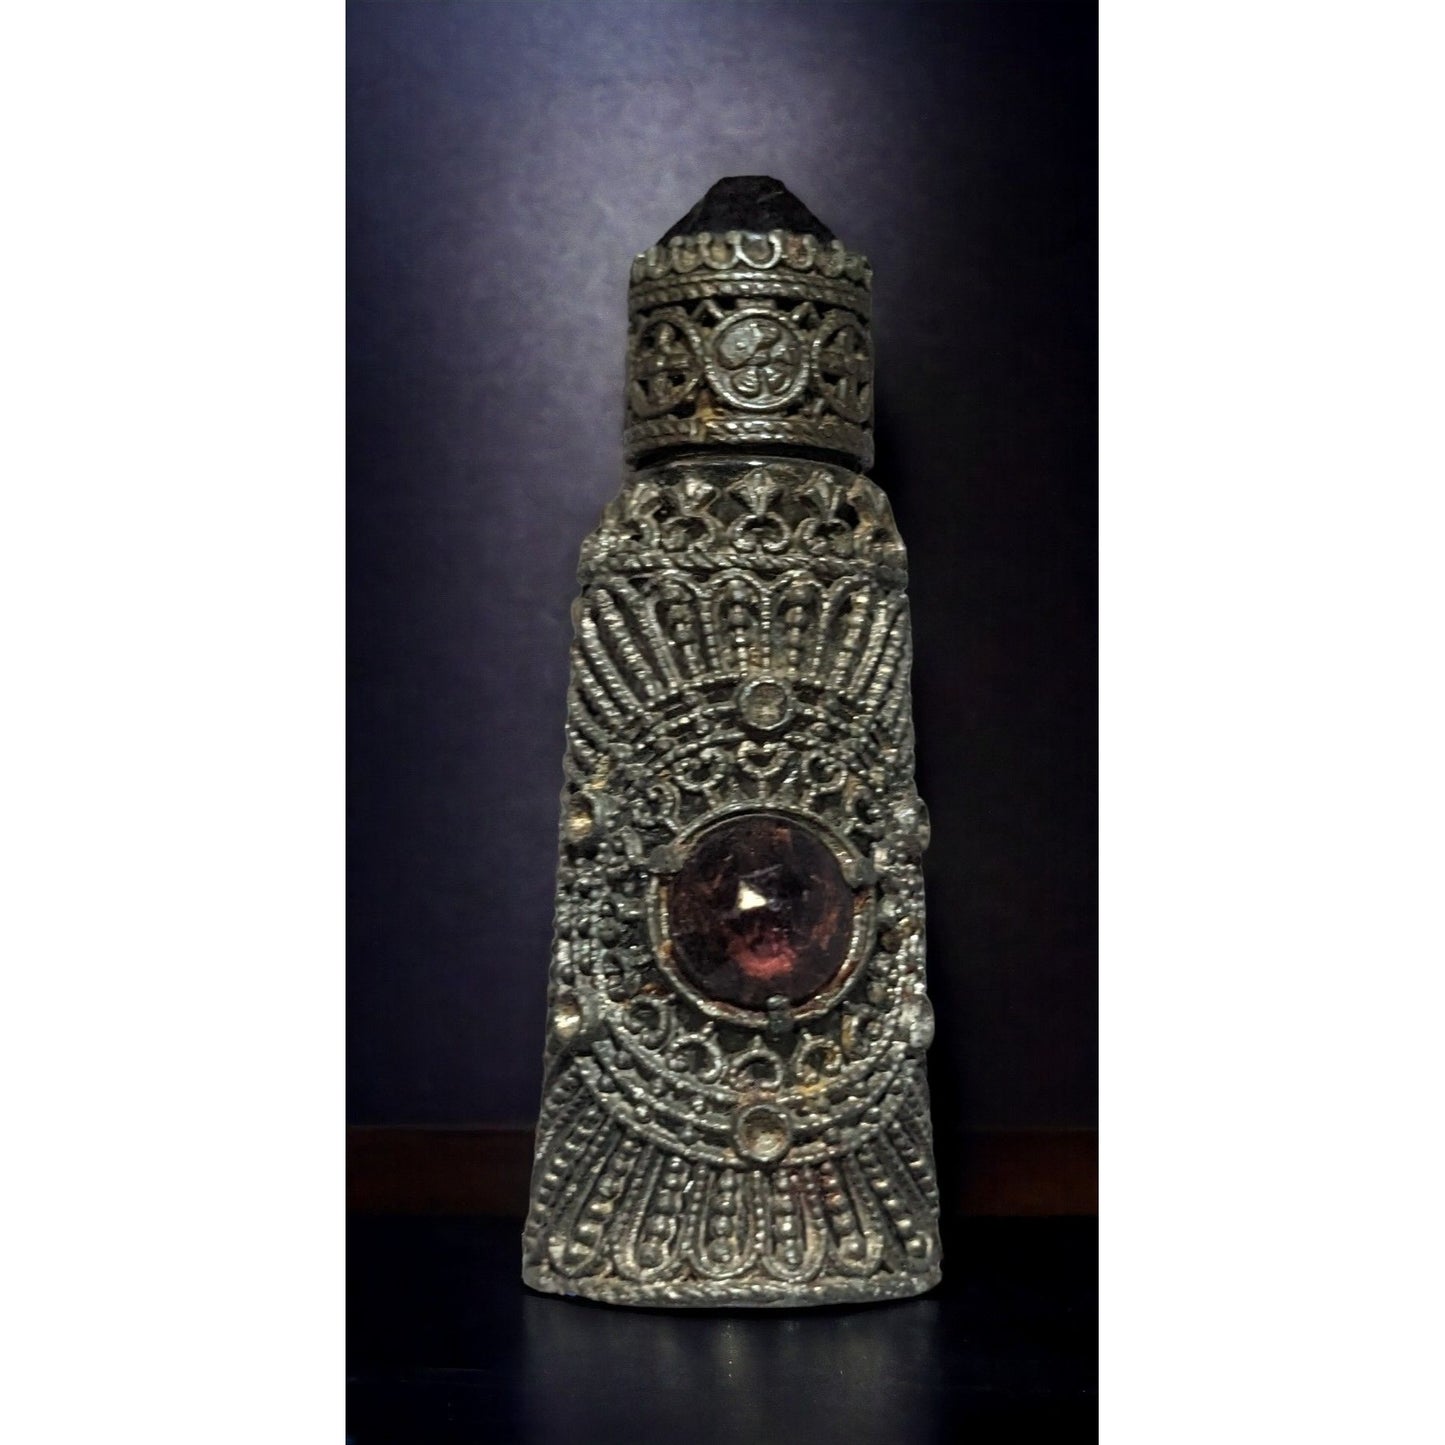 Vintage Irice Caged Metal Perfume Bottle